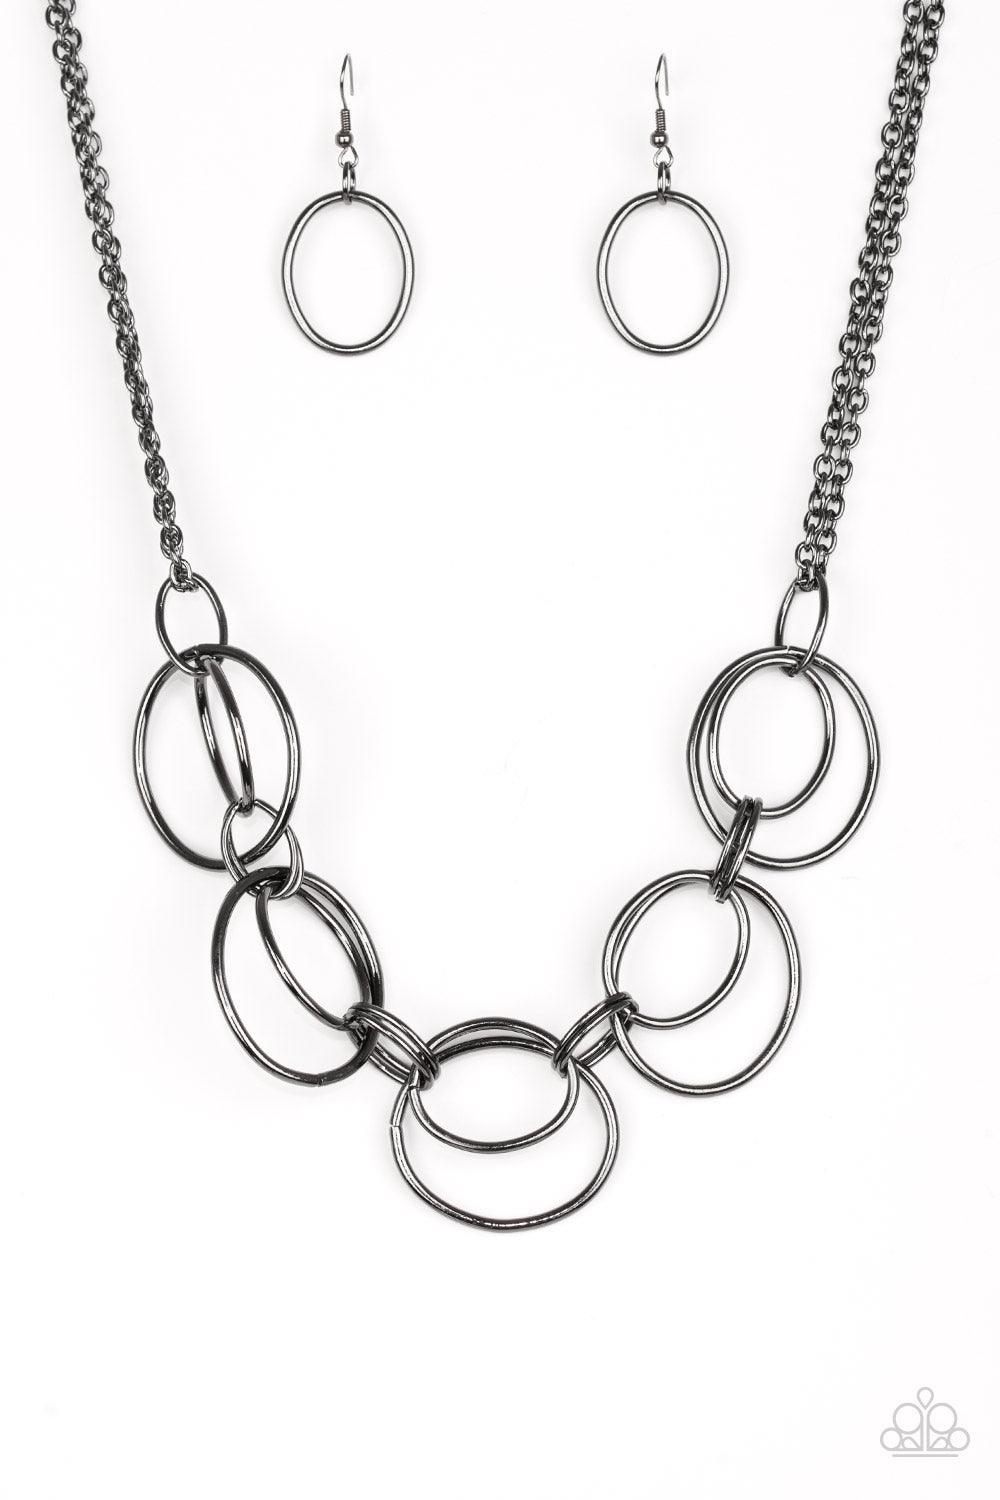 Urban Orbit Black Necklace - Jewelry Bretta by